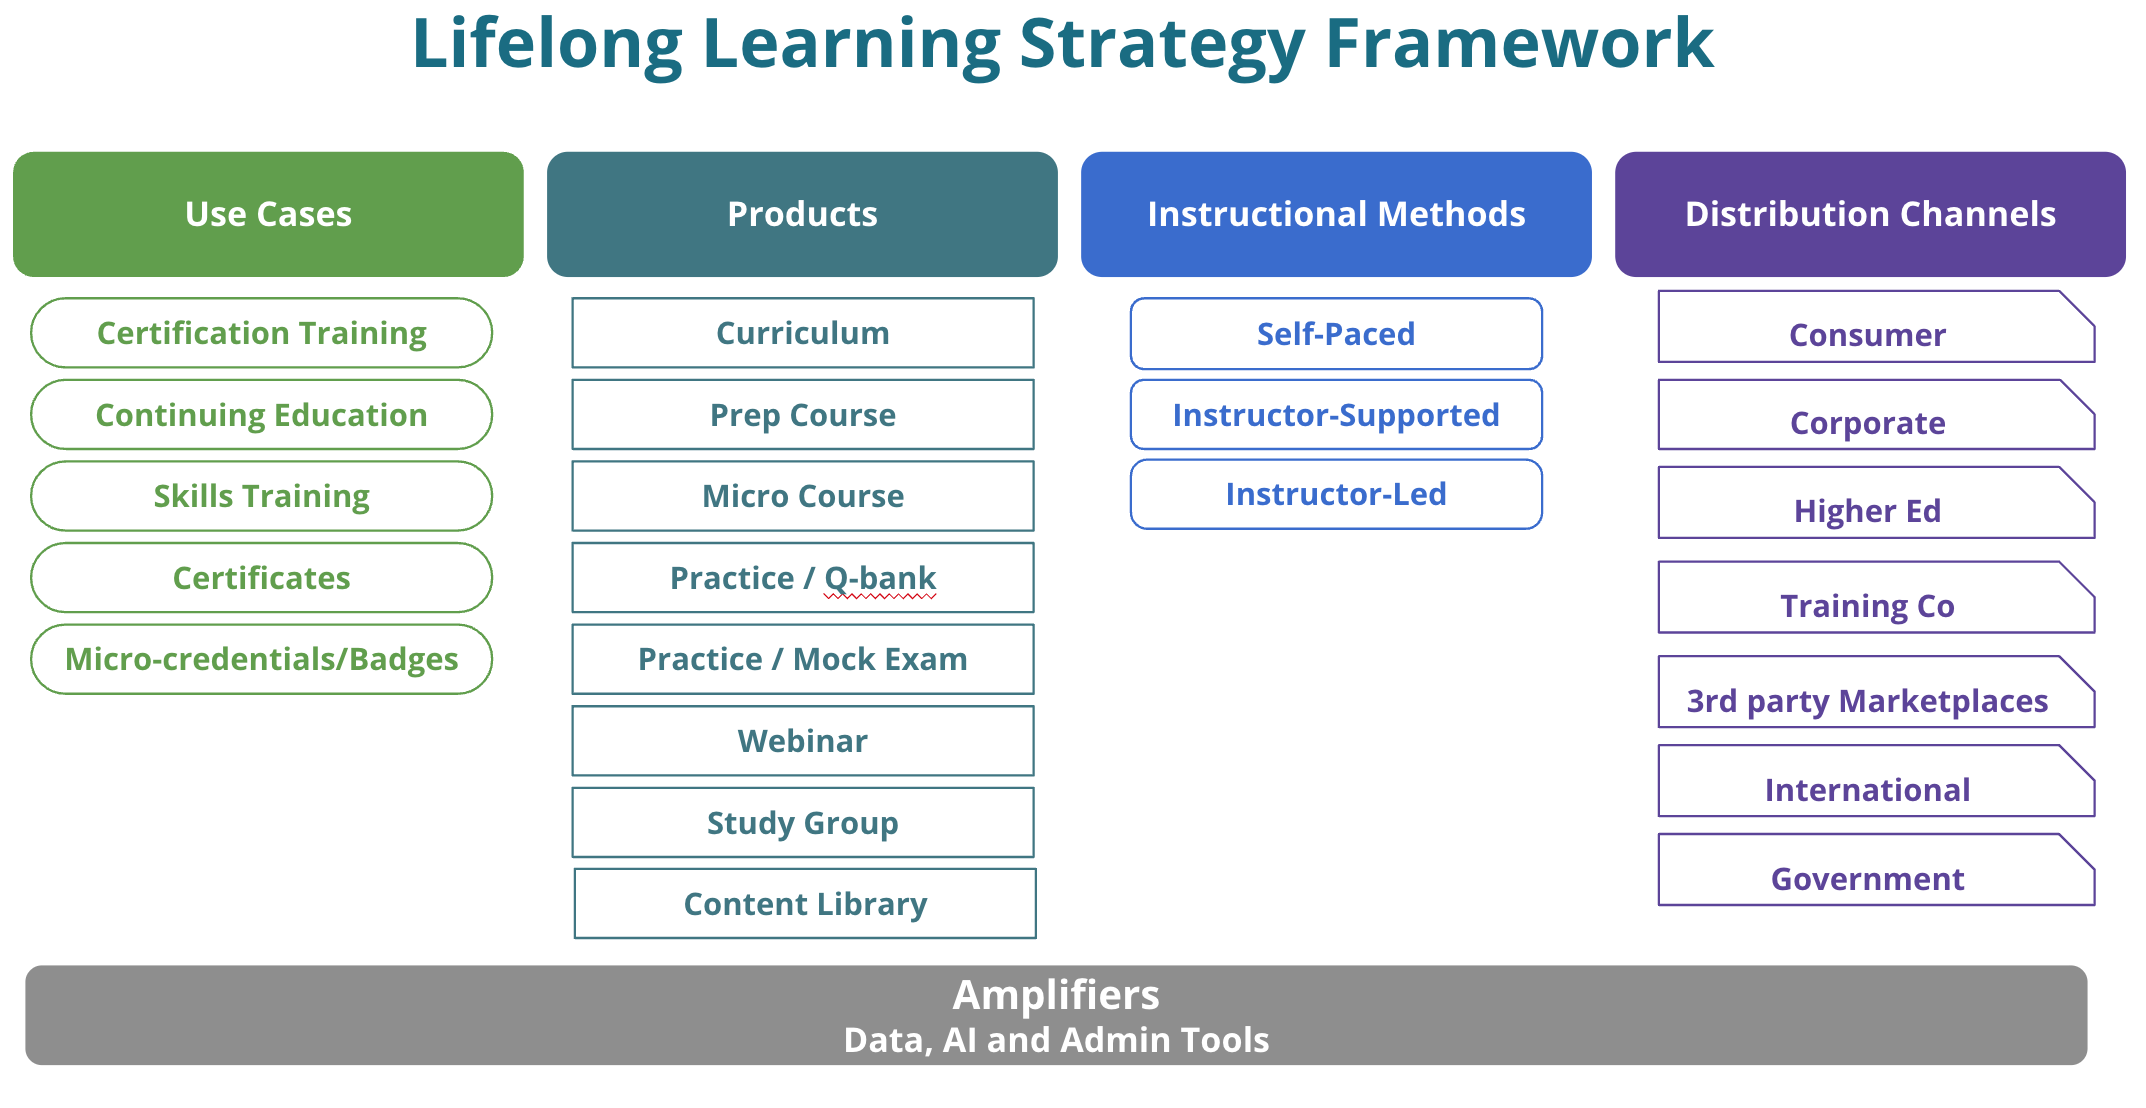 Lifelong Learning Strategy Framework